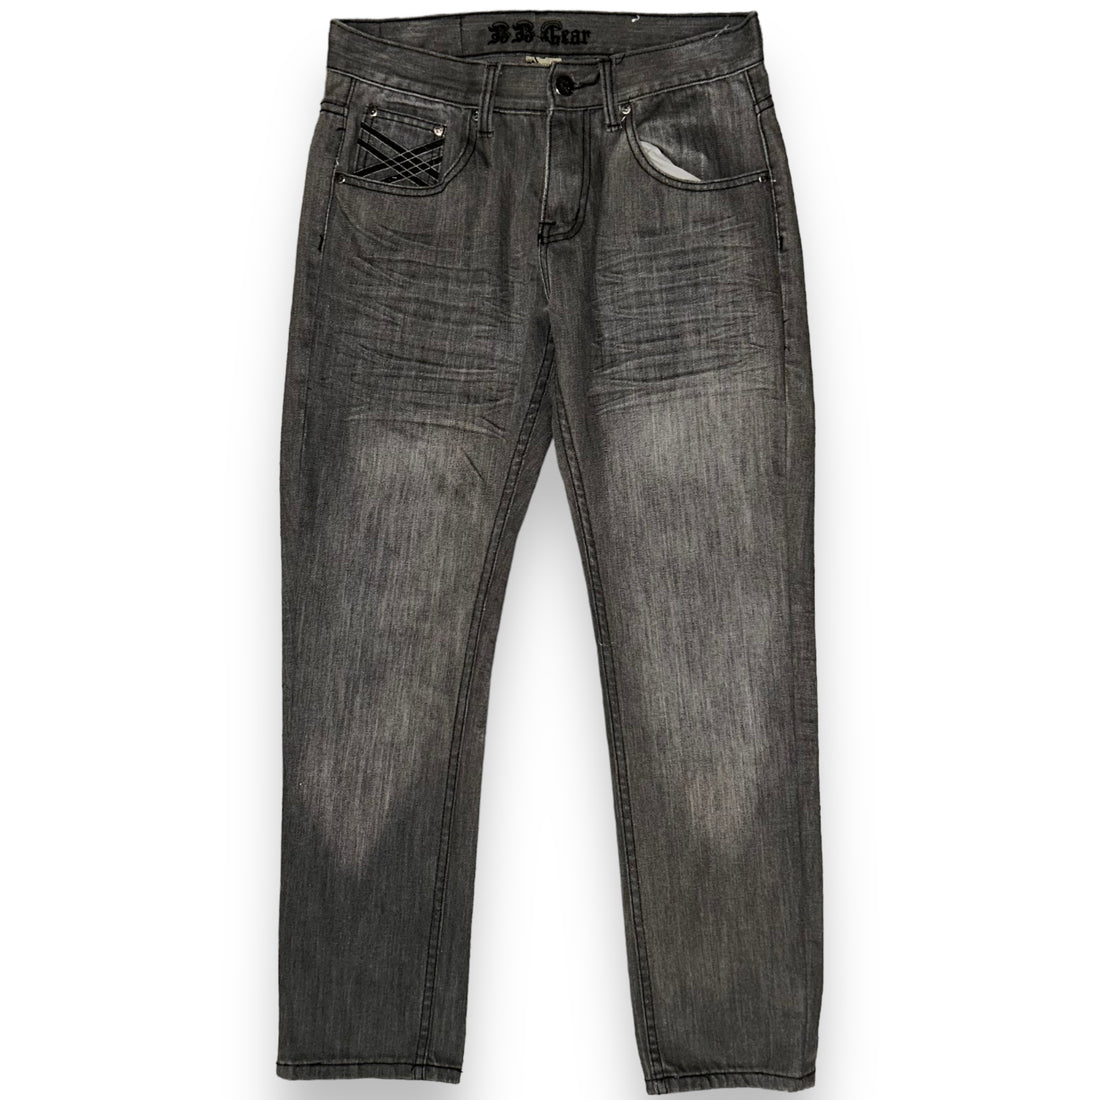 Jeans BB GEAR  (32 USA  M)